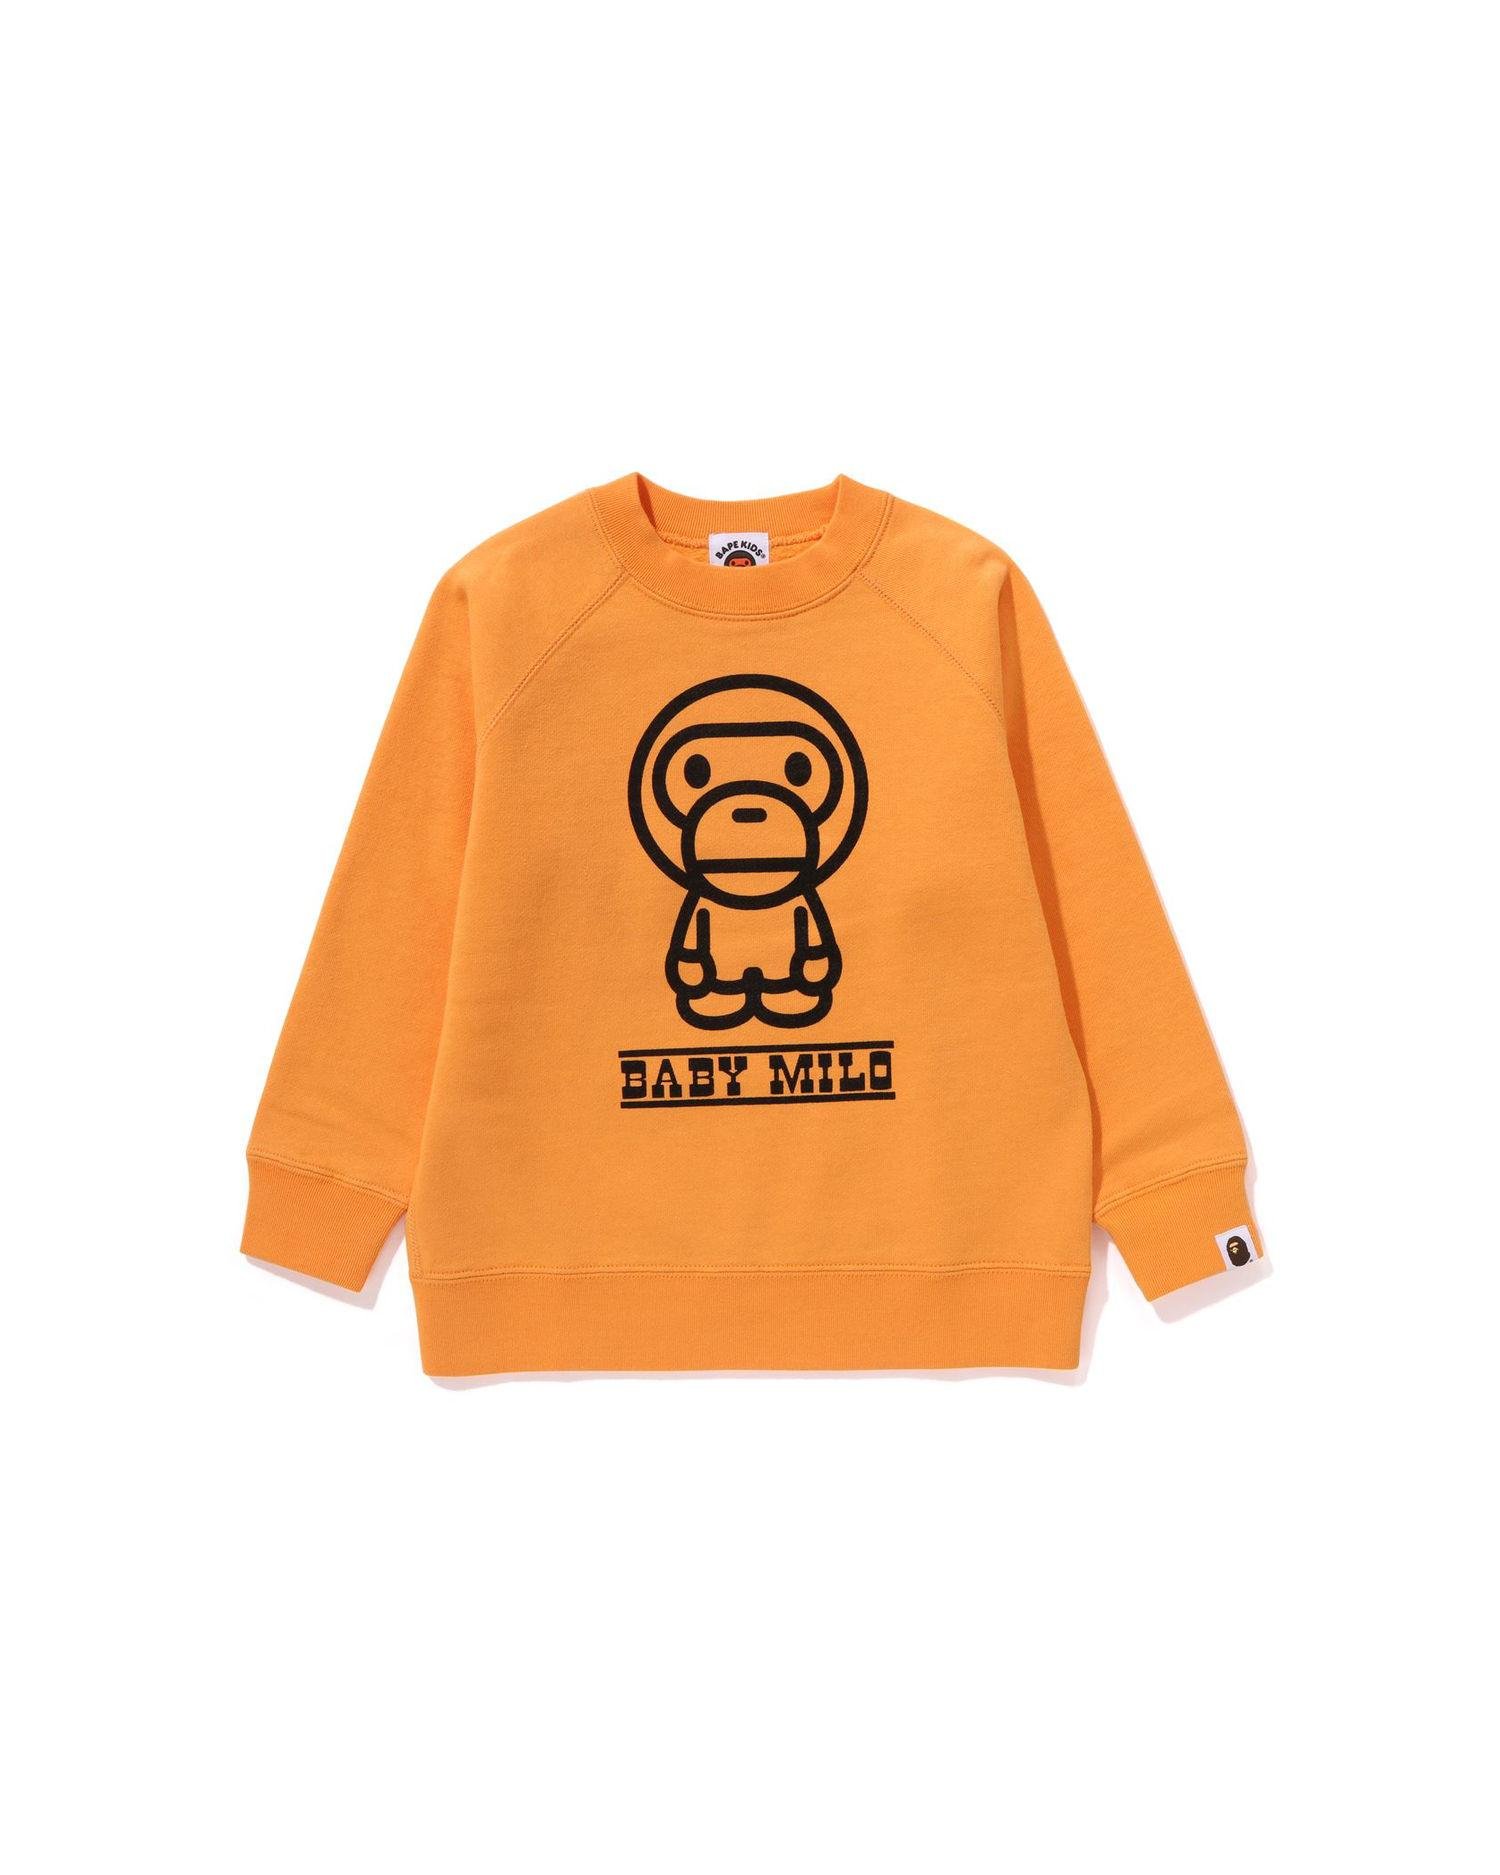 Kids Baby Milo Crewneck Sweatshirt by BAPE